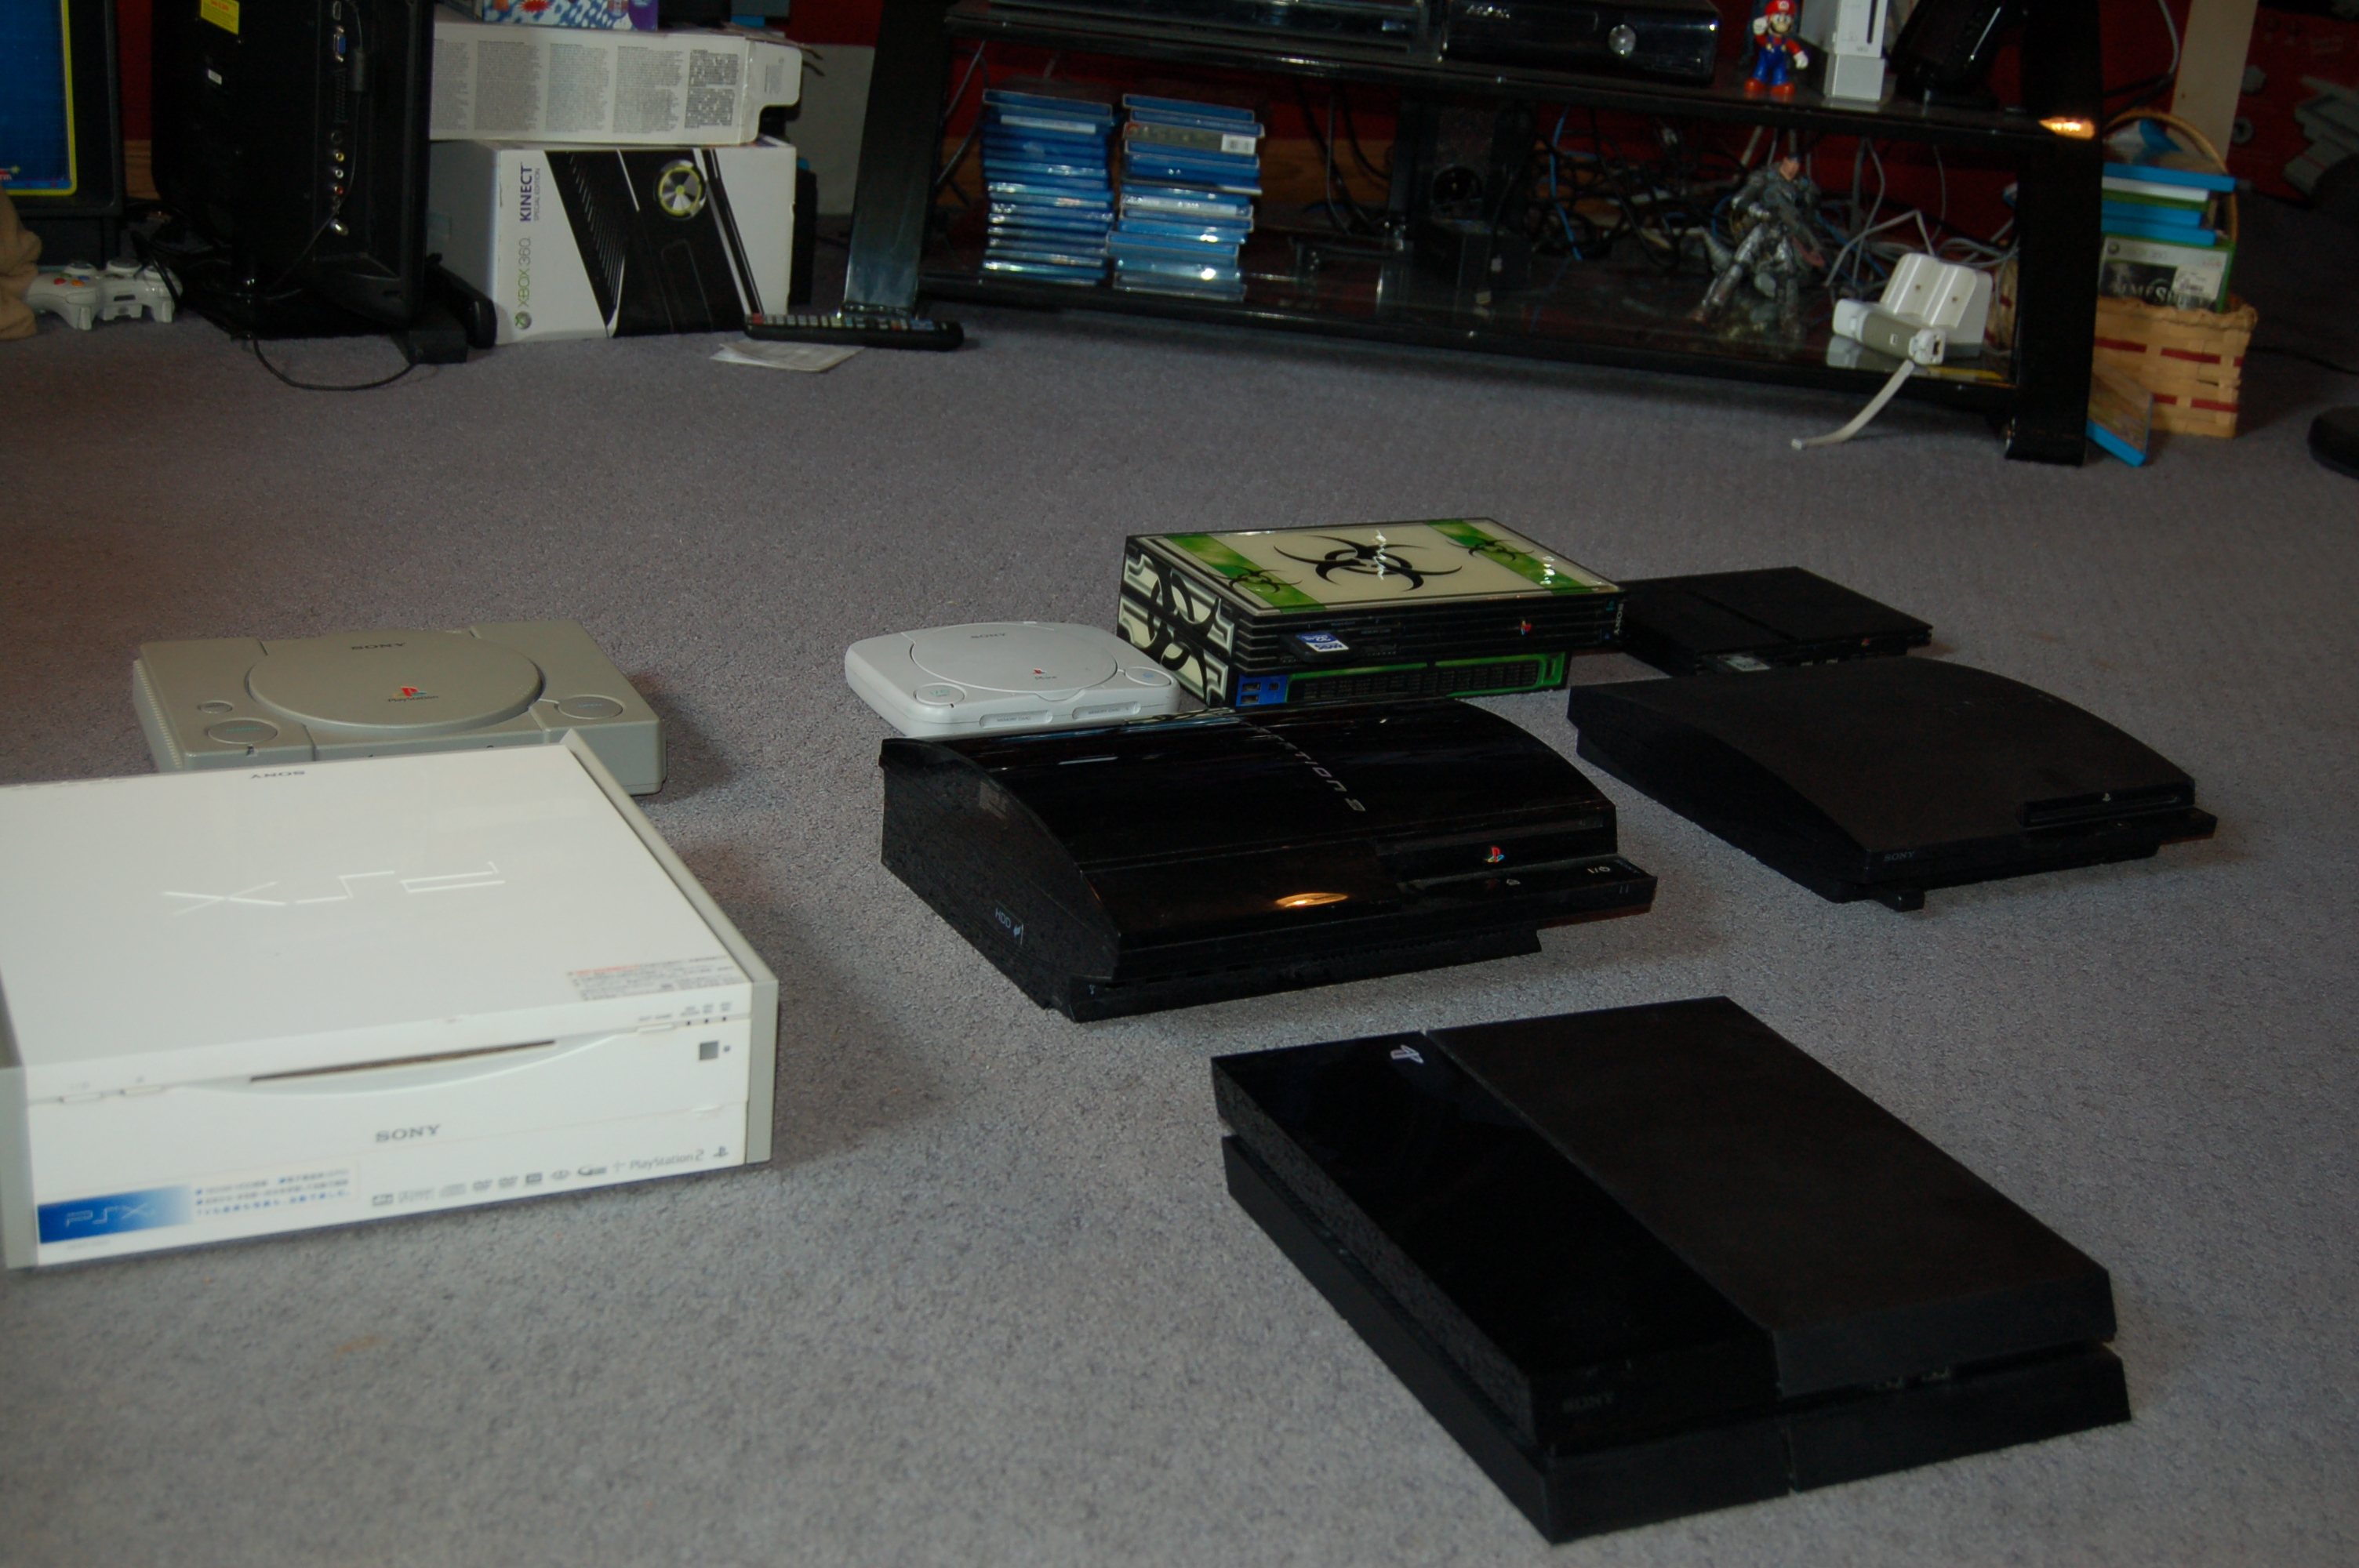 Playstation, PSOne, Playstation 2, PS2 Slim, PSX, Playstation 3 20GB, PS3 Slim, Playstation 4